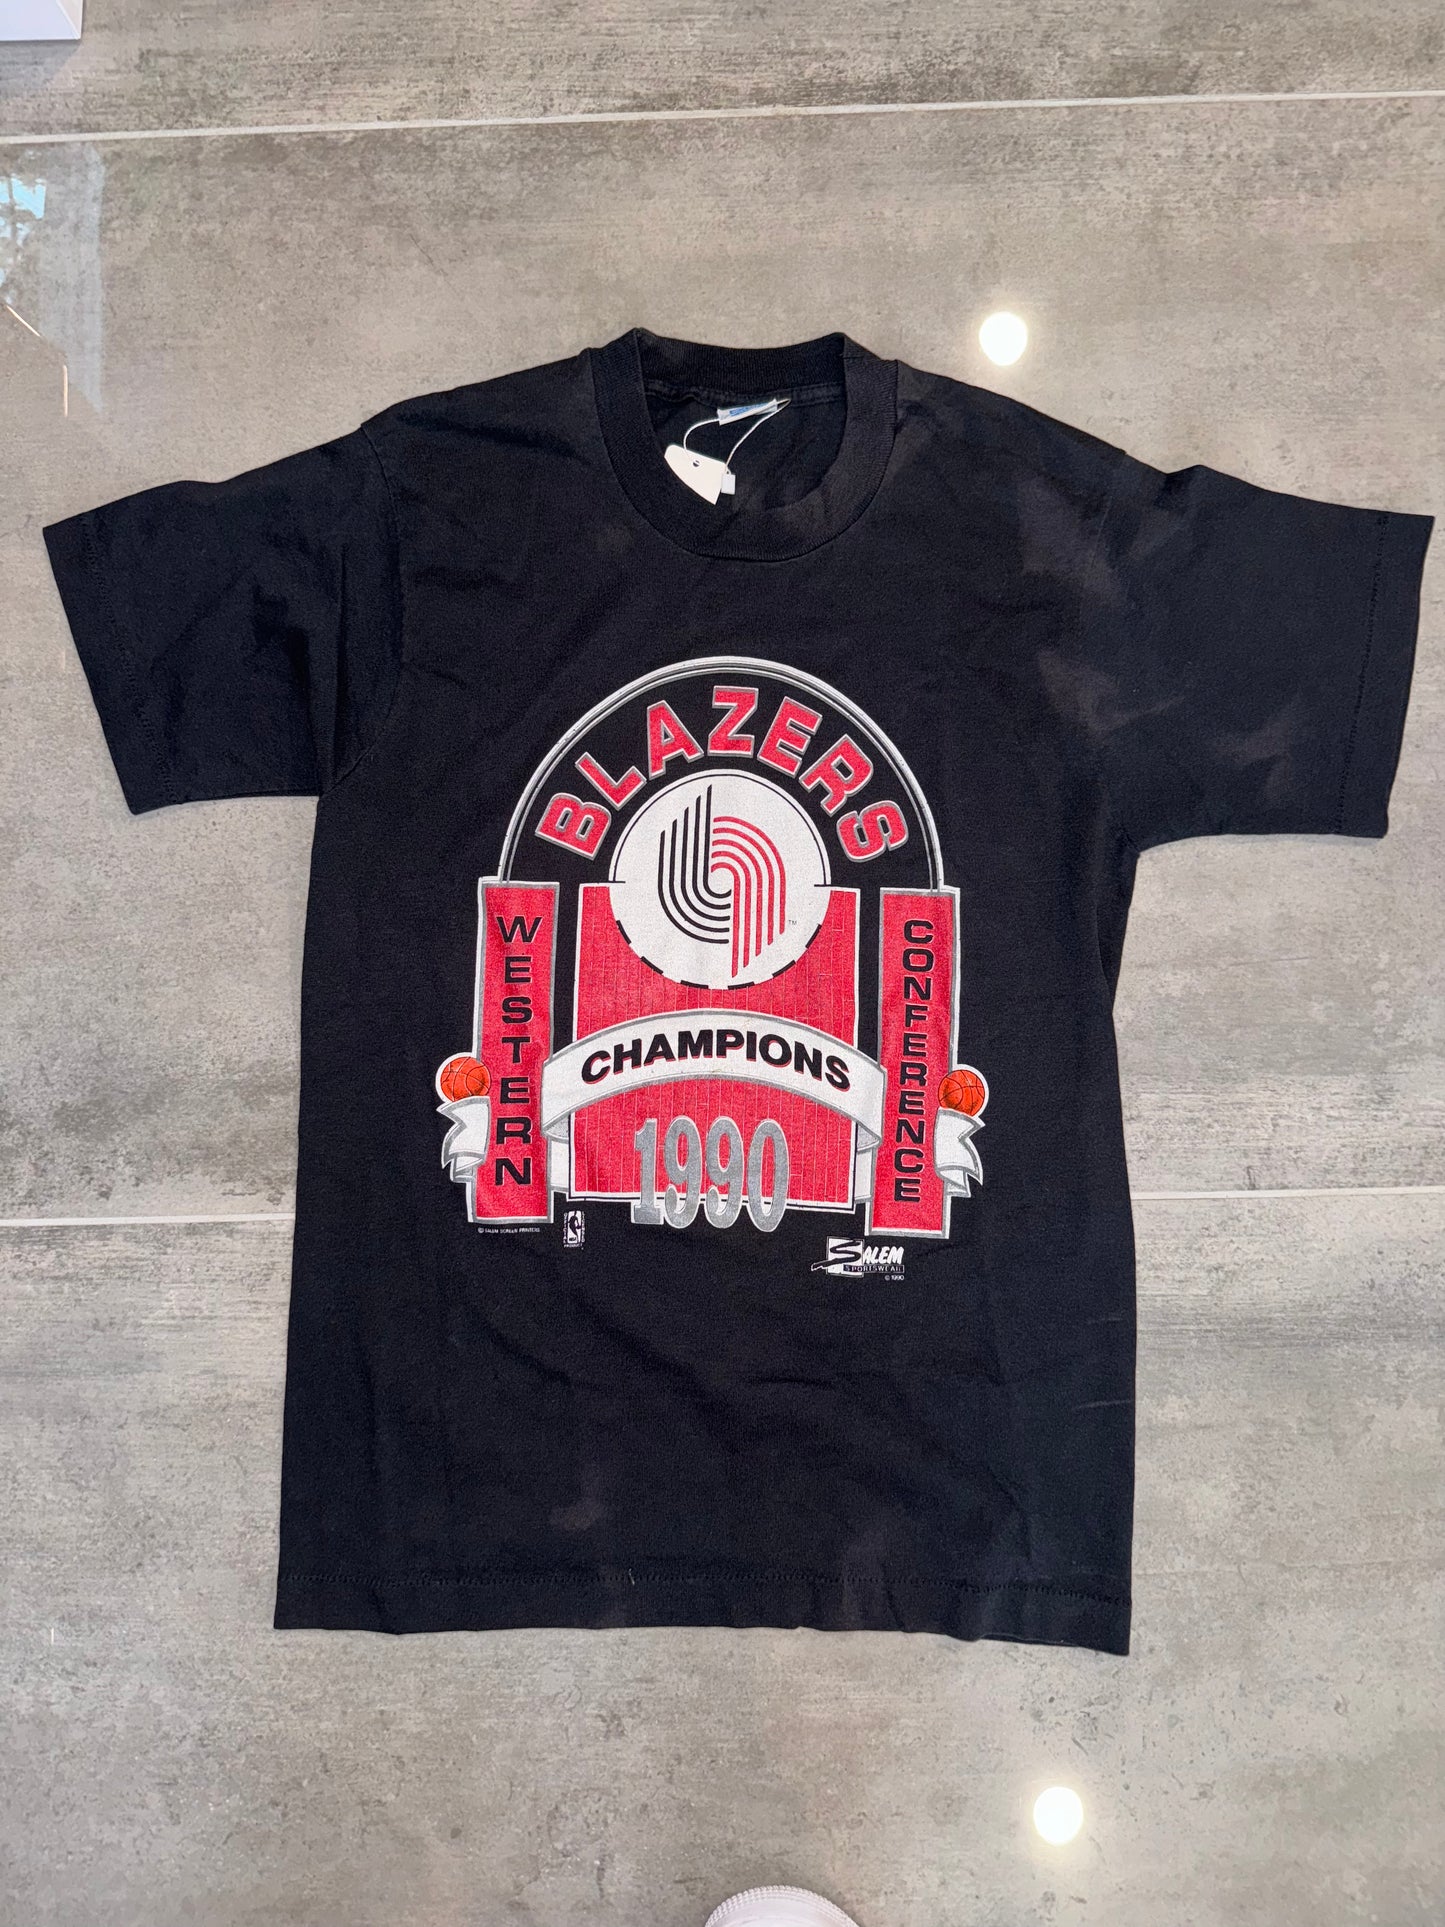 Vintage early 90’s Portland Trail Blazers Salem tee 1990 western champs